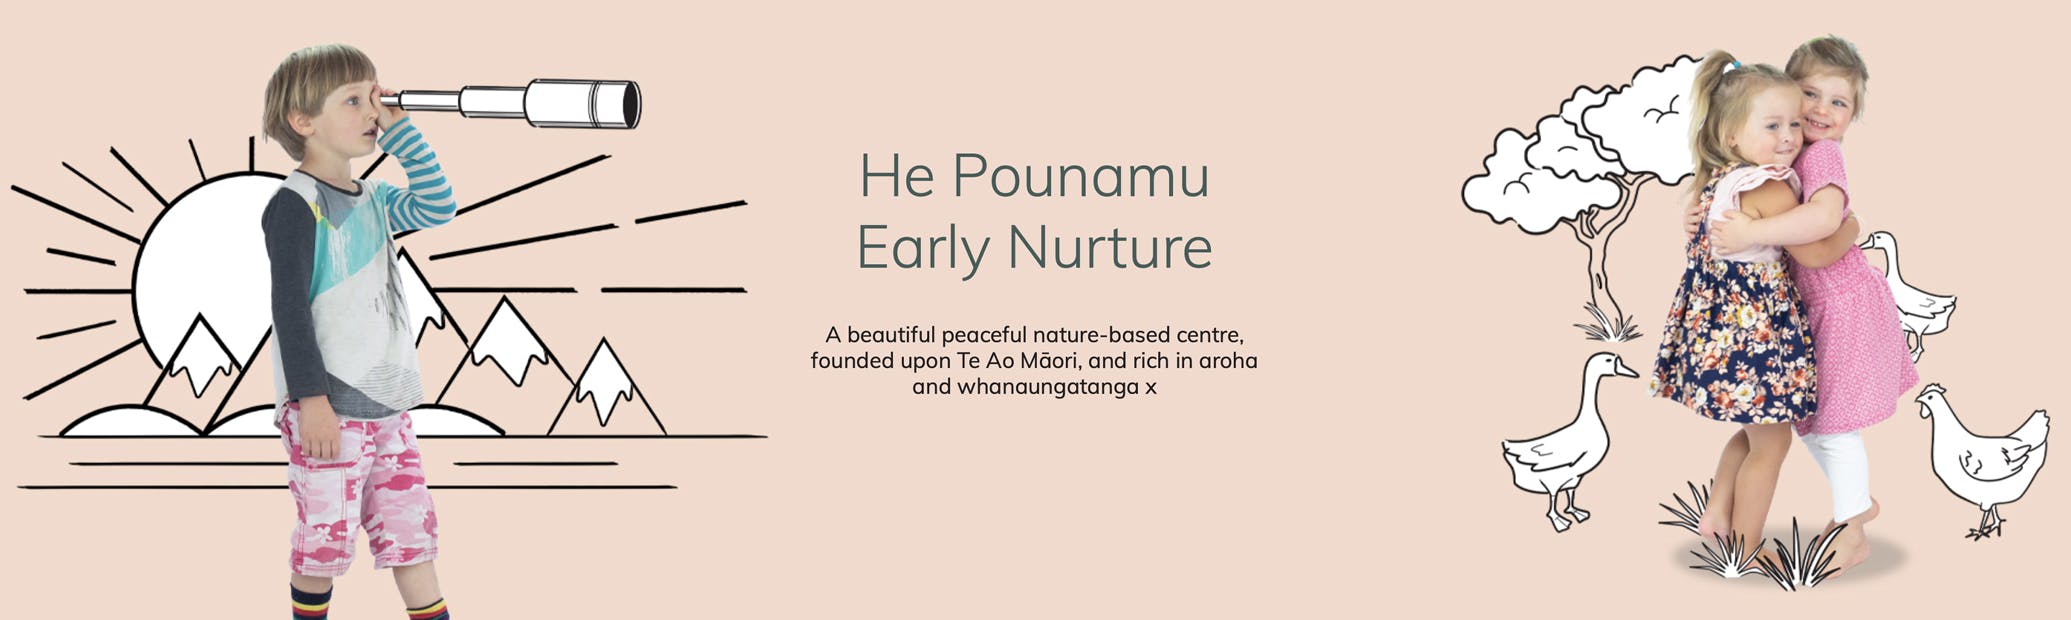 He Pounamu Digital Website Banner Design